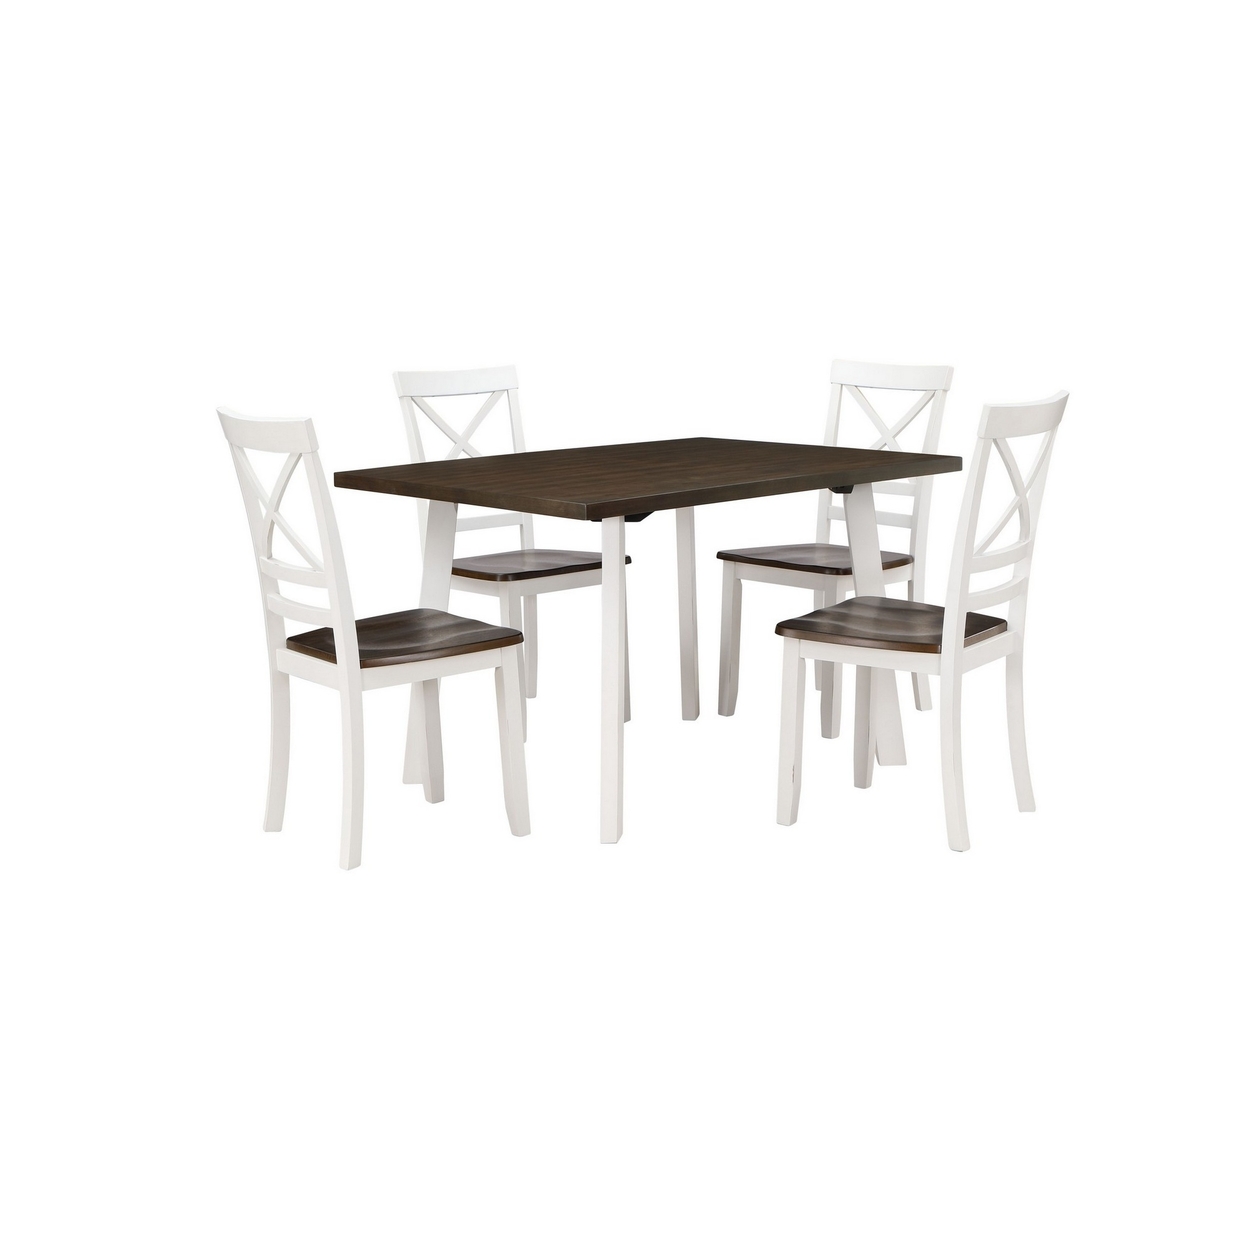 Dera 5 Piece Dining Table Set, 4 Crossback Rubberwood Chairs, Brown, White -Saltoro Sherpi